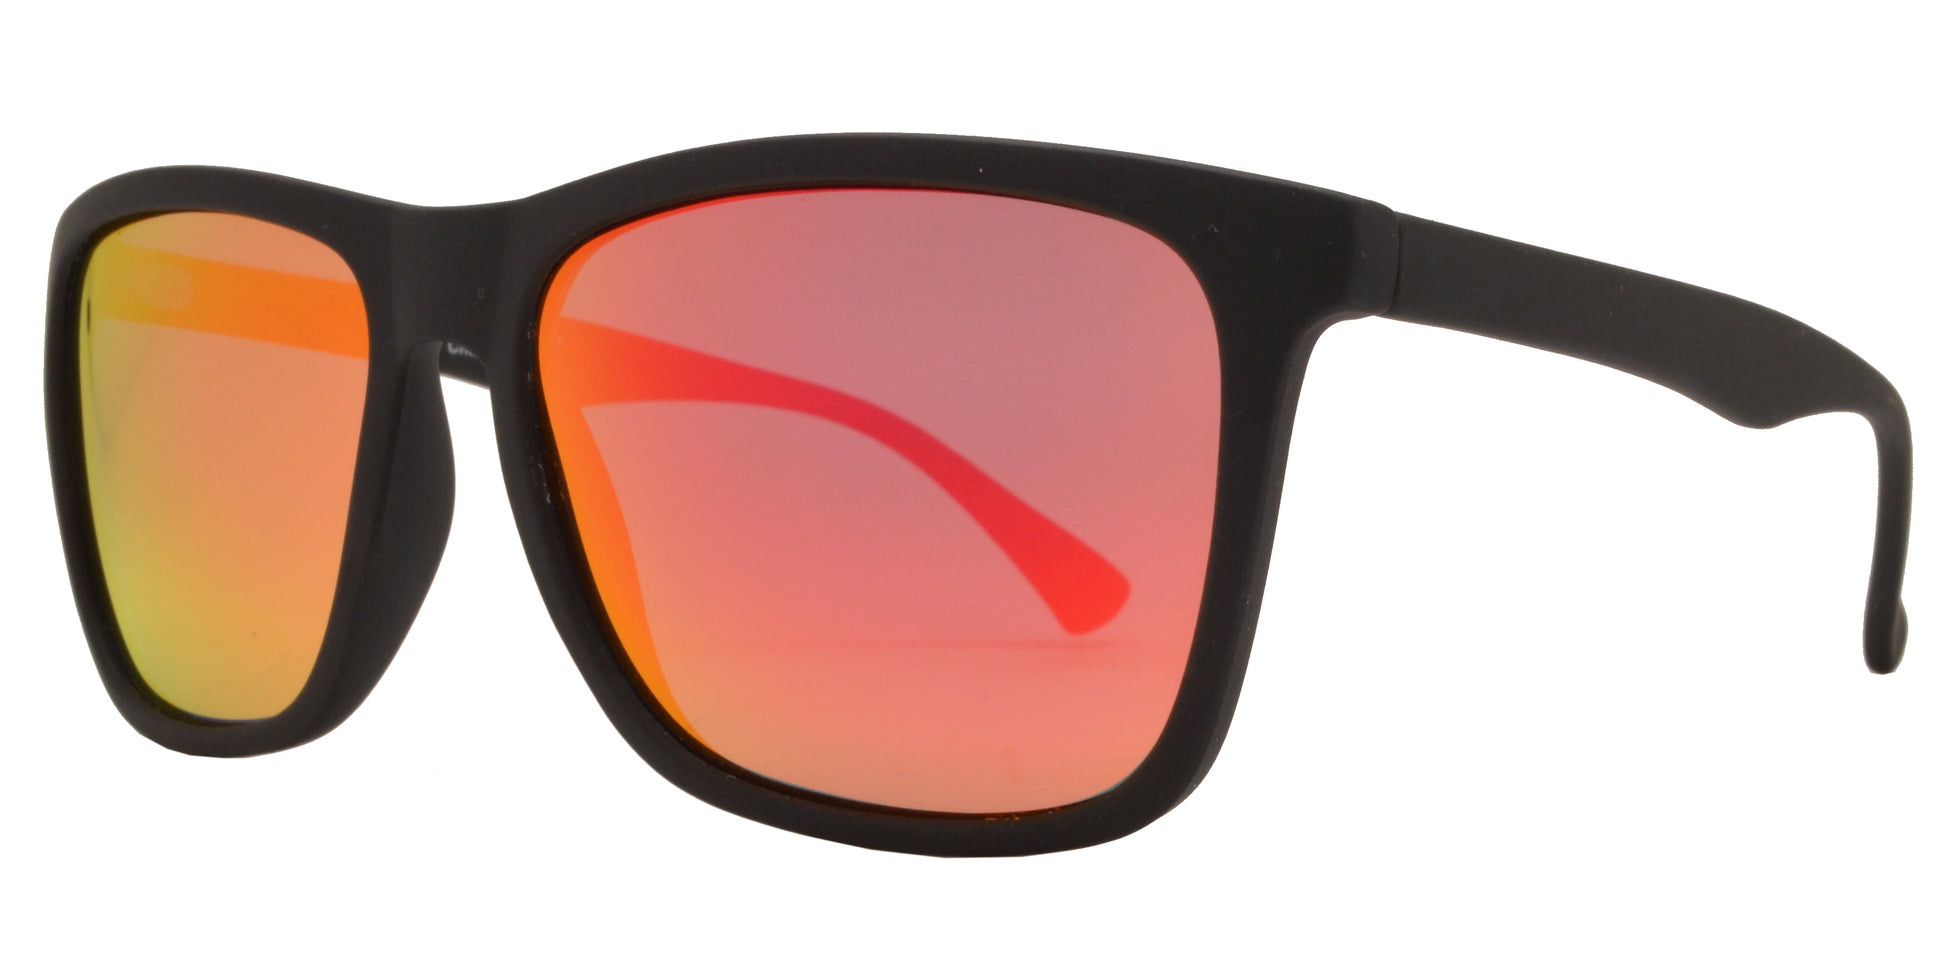 Sunglasses Sport Polarized Men